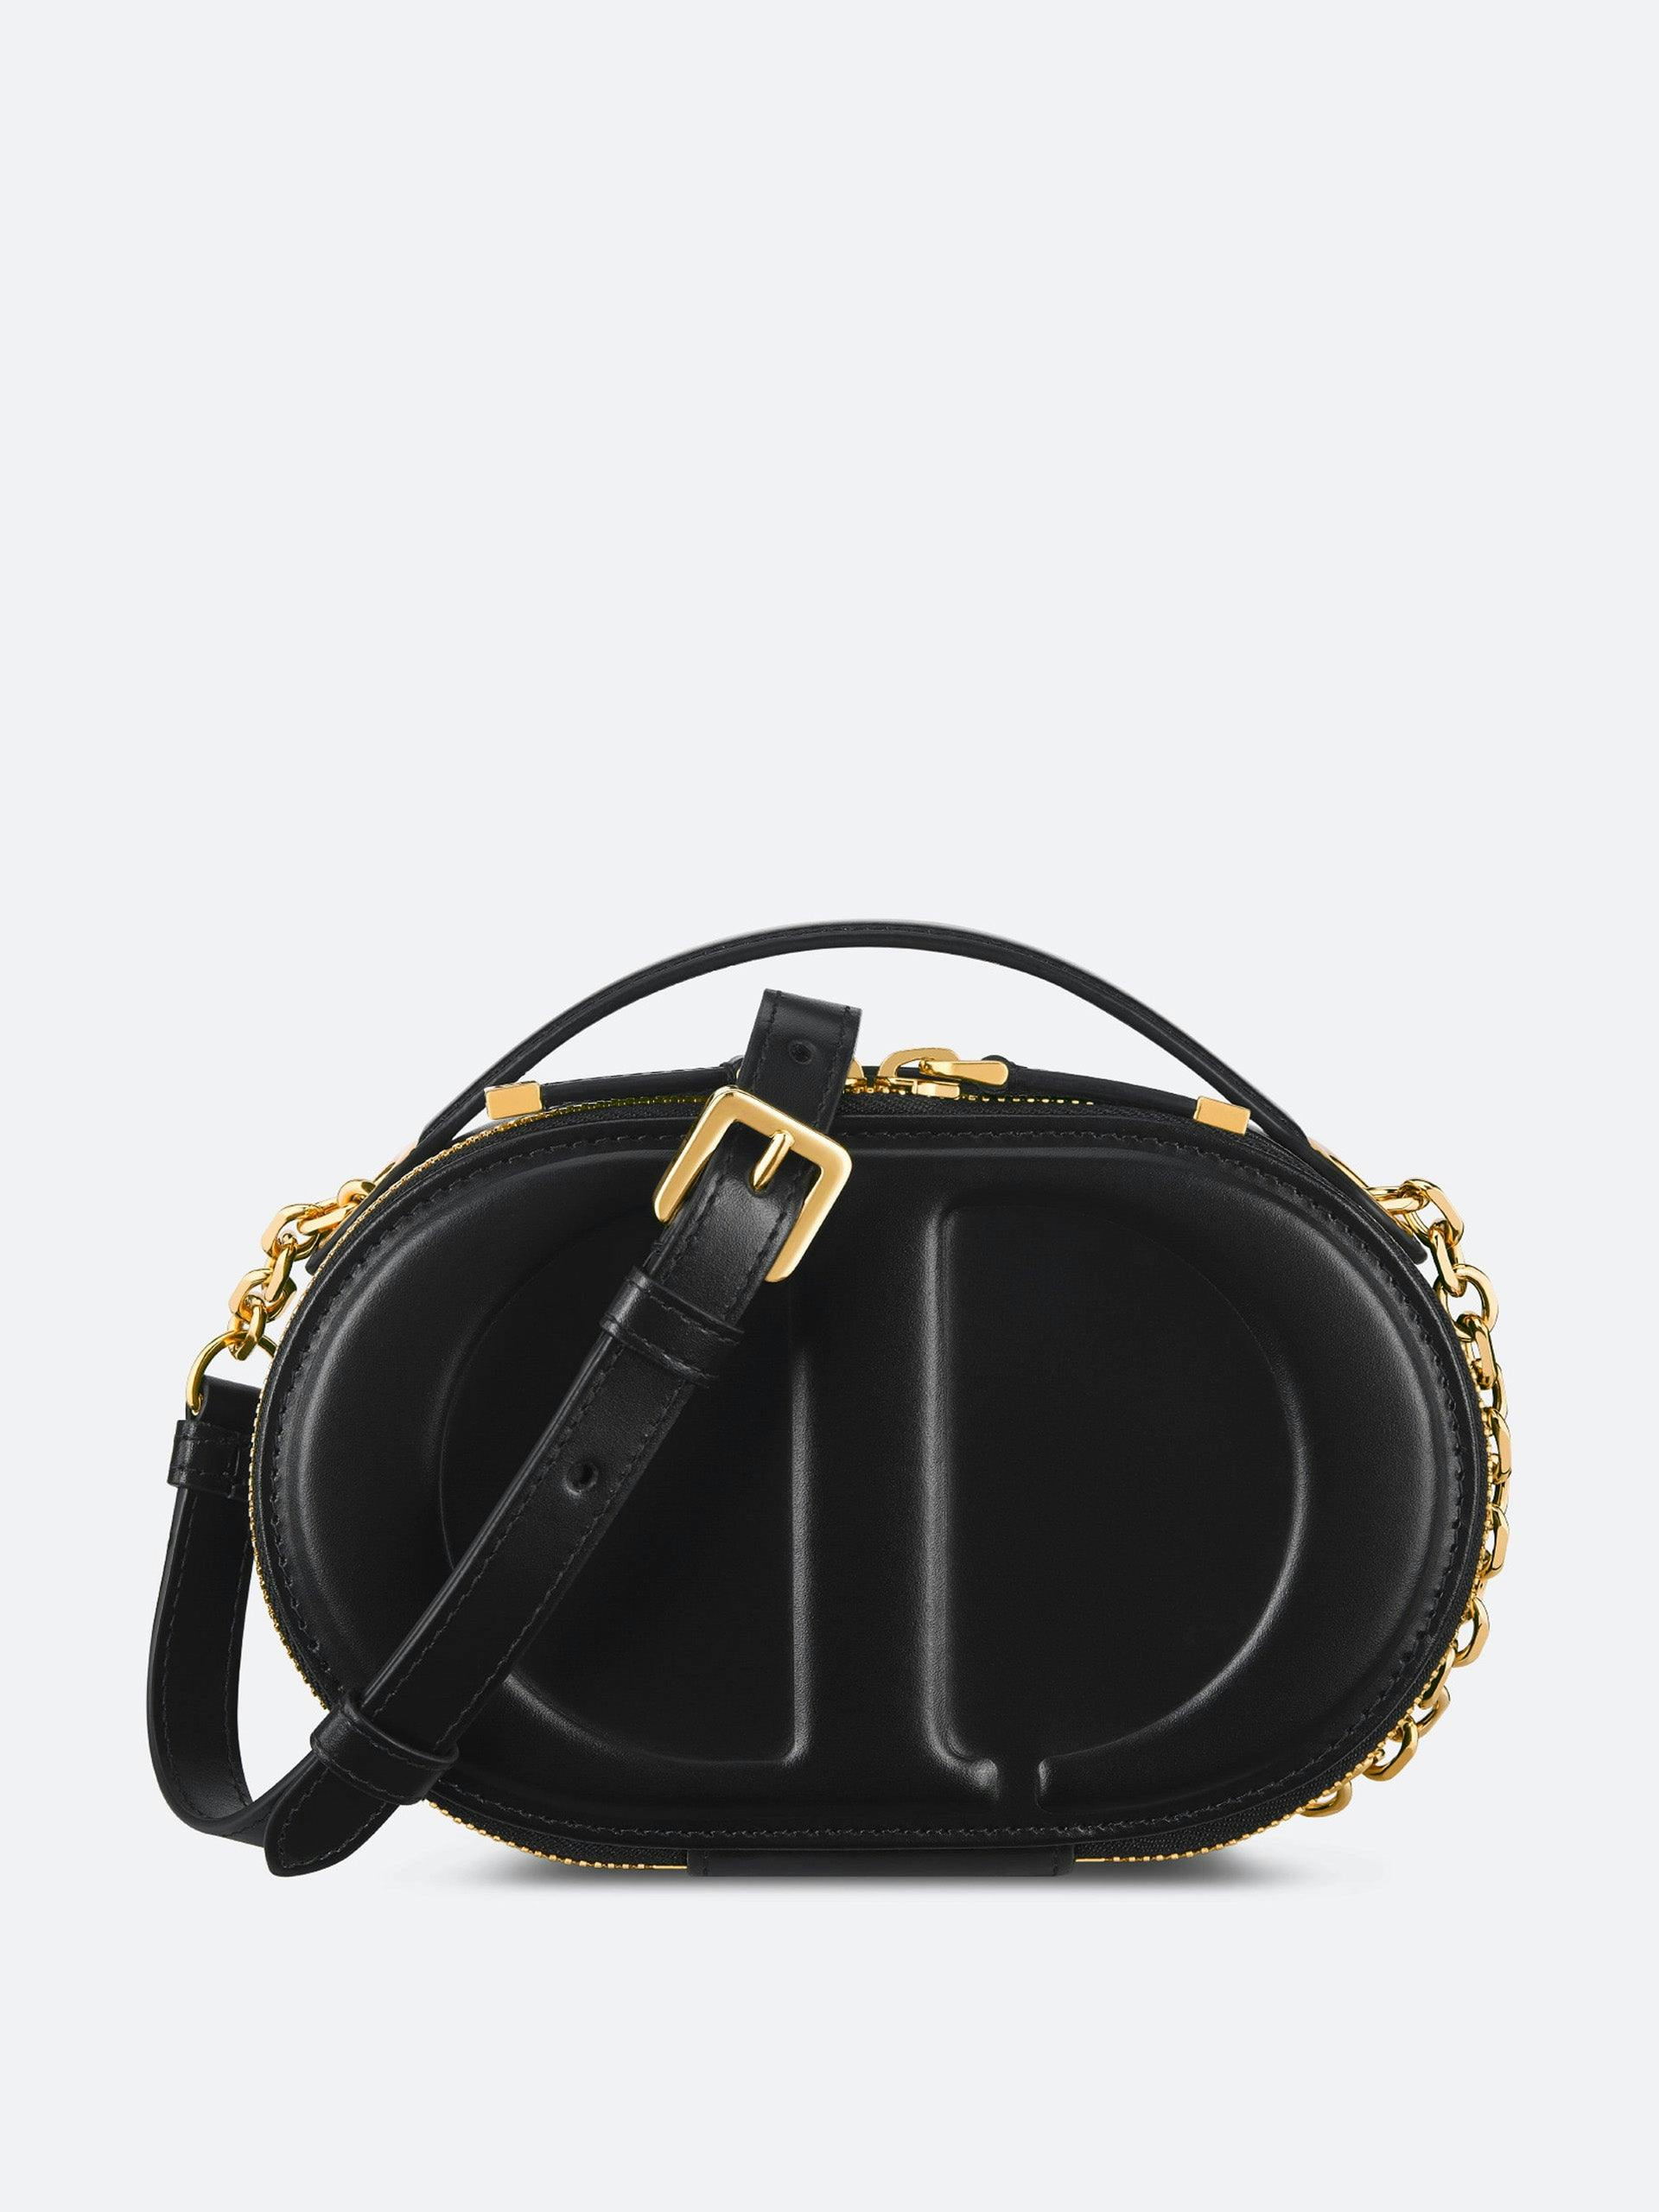 Black leather oval Camera bag